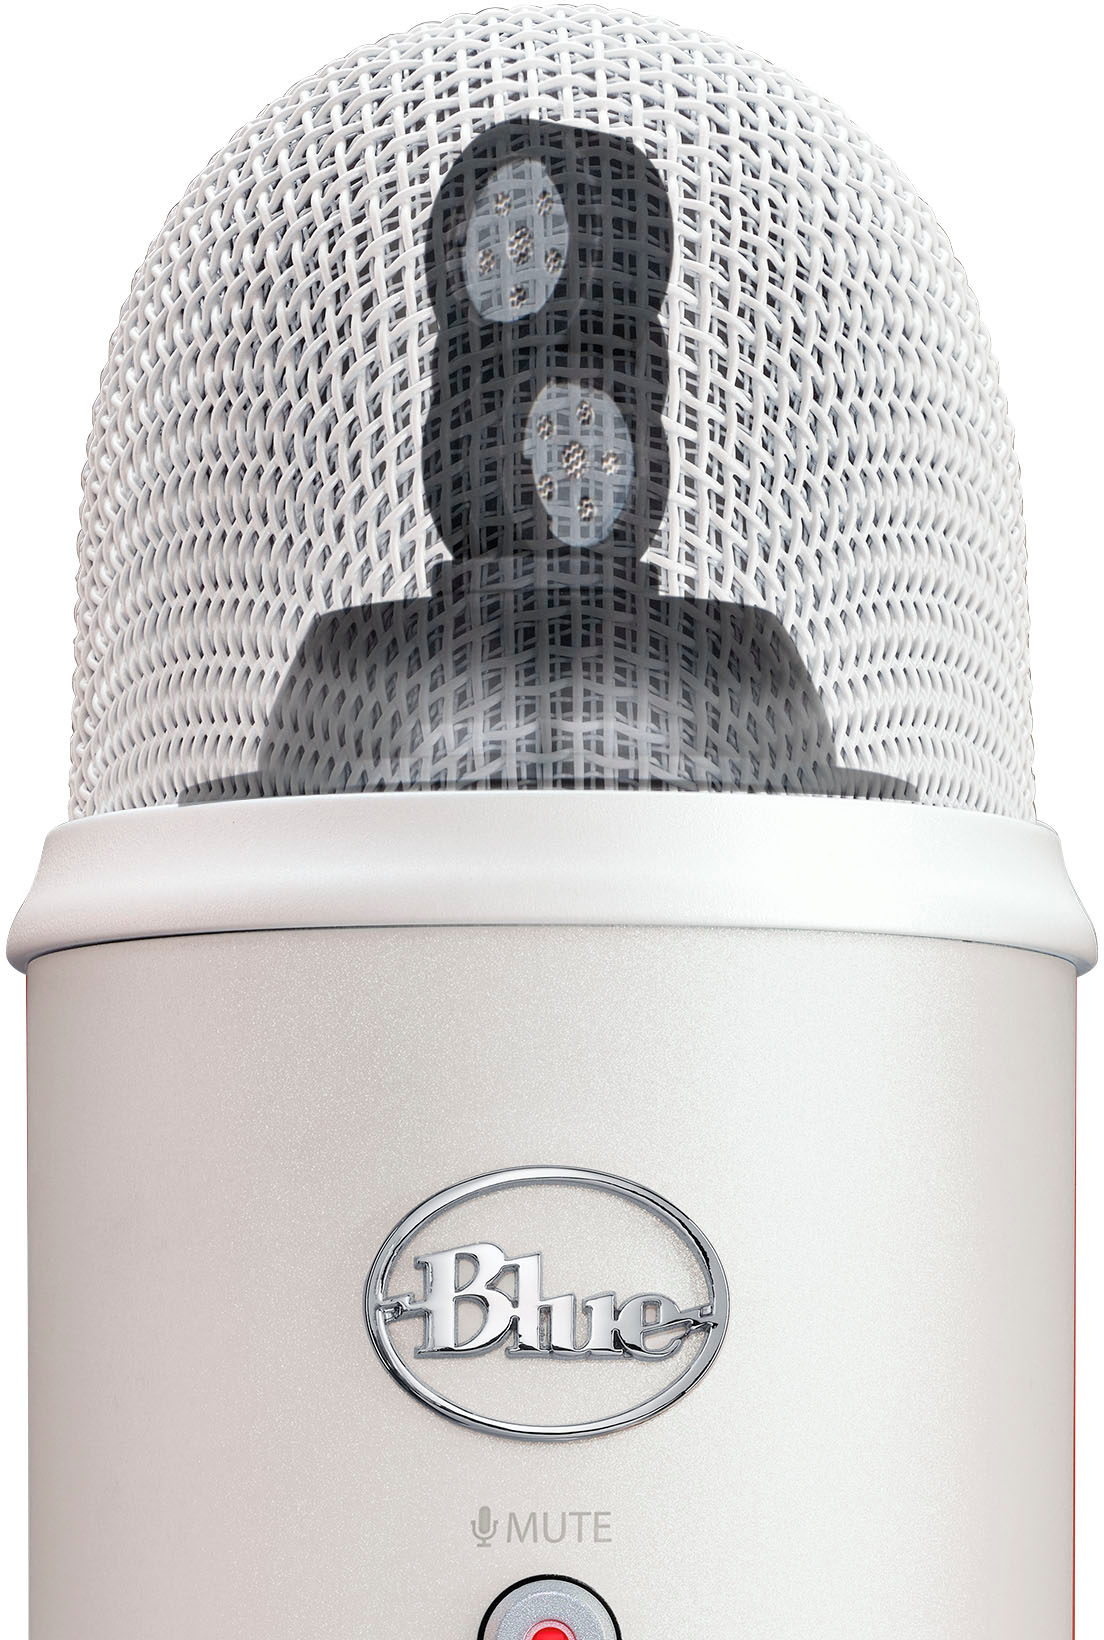 Blue Microphones Yeti USB Microphone (White Mist) with 3.0 4-Port USB Hub  Bundle